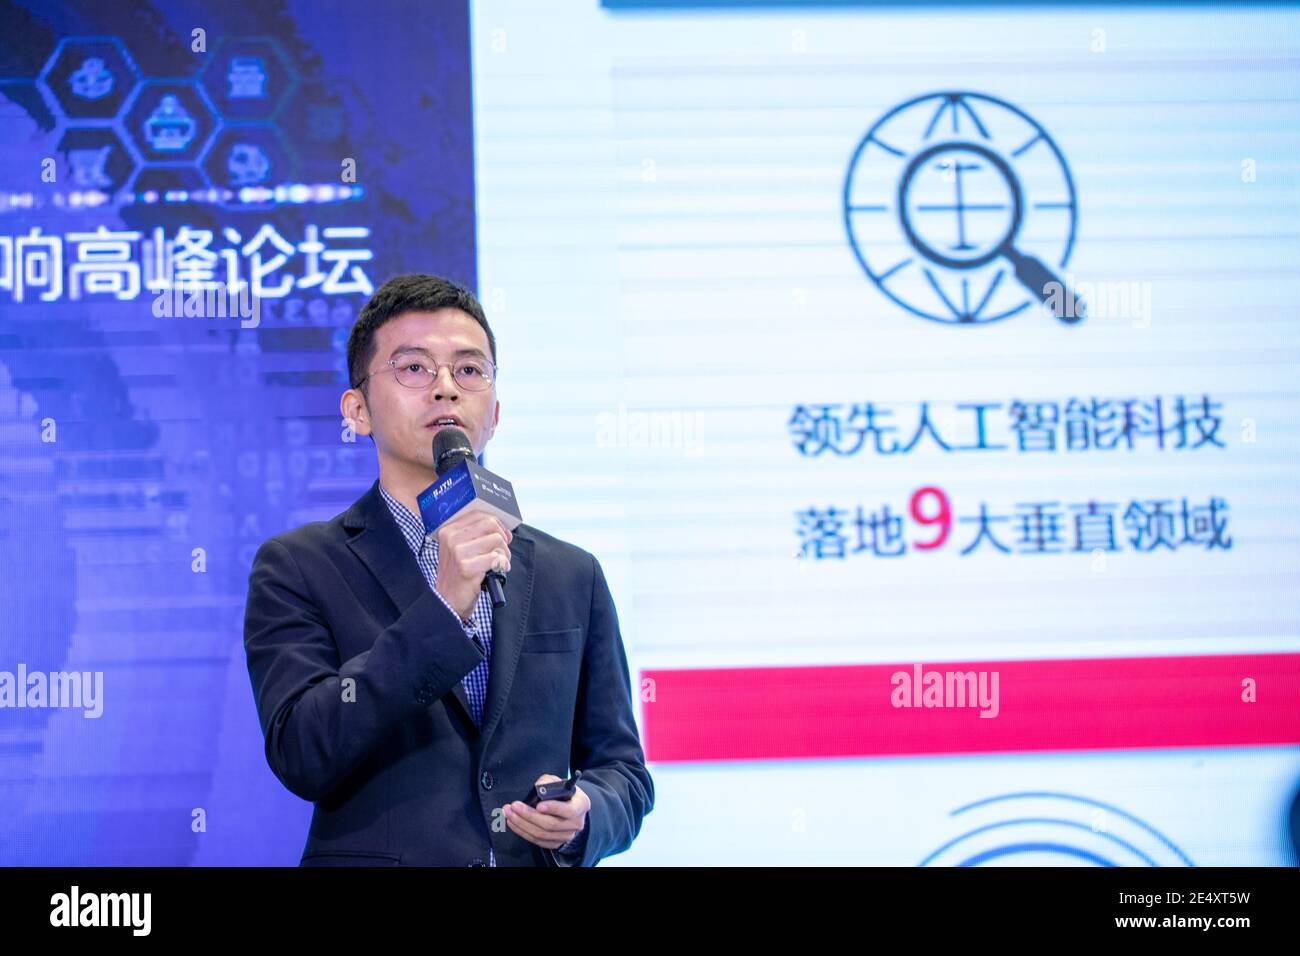 --FILE--Zhang Shaoting, vicepresidente de SenseTime, actualmente la compañía de inteligencia artificial (AI) más valiosa del mundo, pronuncia un discurso durin Foto de stock